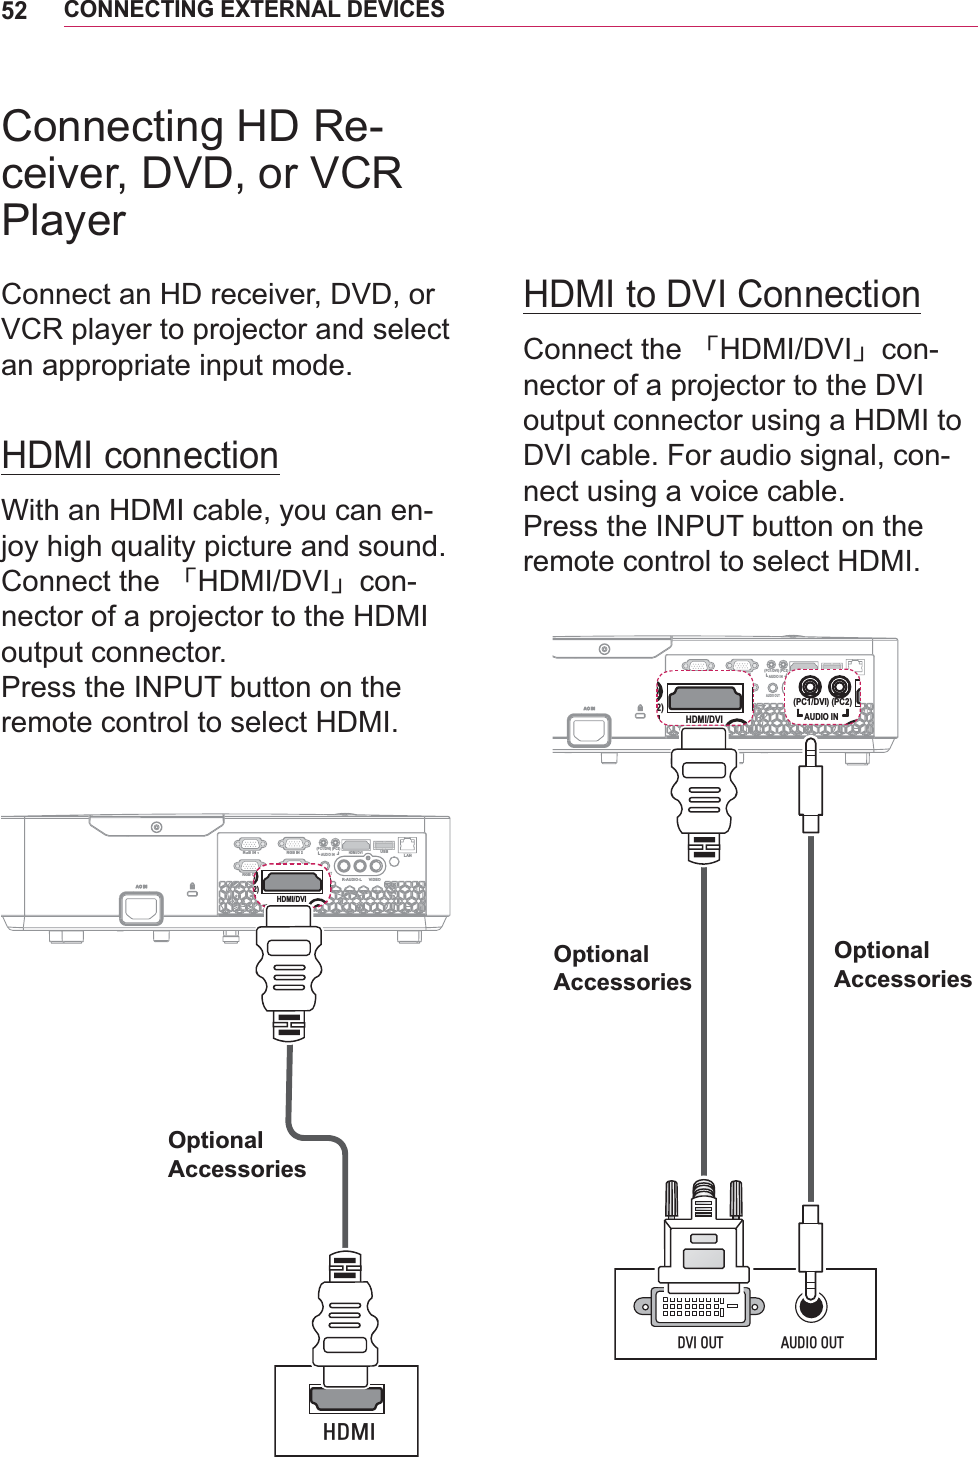  䭽䭾 RGB IN 1RGB IN2RGB OUTRS 232CLANUSBAUDIO OUTVIDEOR-AUDIO-L(PC1/DVI) (PC2)AUDIO INHDMI/DVI2)HDMI/DVI+&apos;0,䭽䭾:RGB IN1RGB IN 2RGB OUTRS 232CLANUSBAUDIO OUTVIDEOR-AUDIO-L(PC1/DVI) (PC2)AUDIO INHDMI/DVI2)HDMI/DVI(PC1/DVI) (PC2)AUDIO IN$8&apos;,2287&apos;9,287